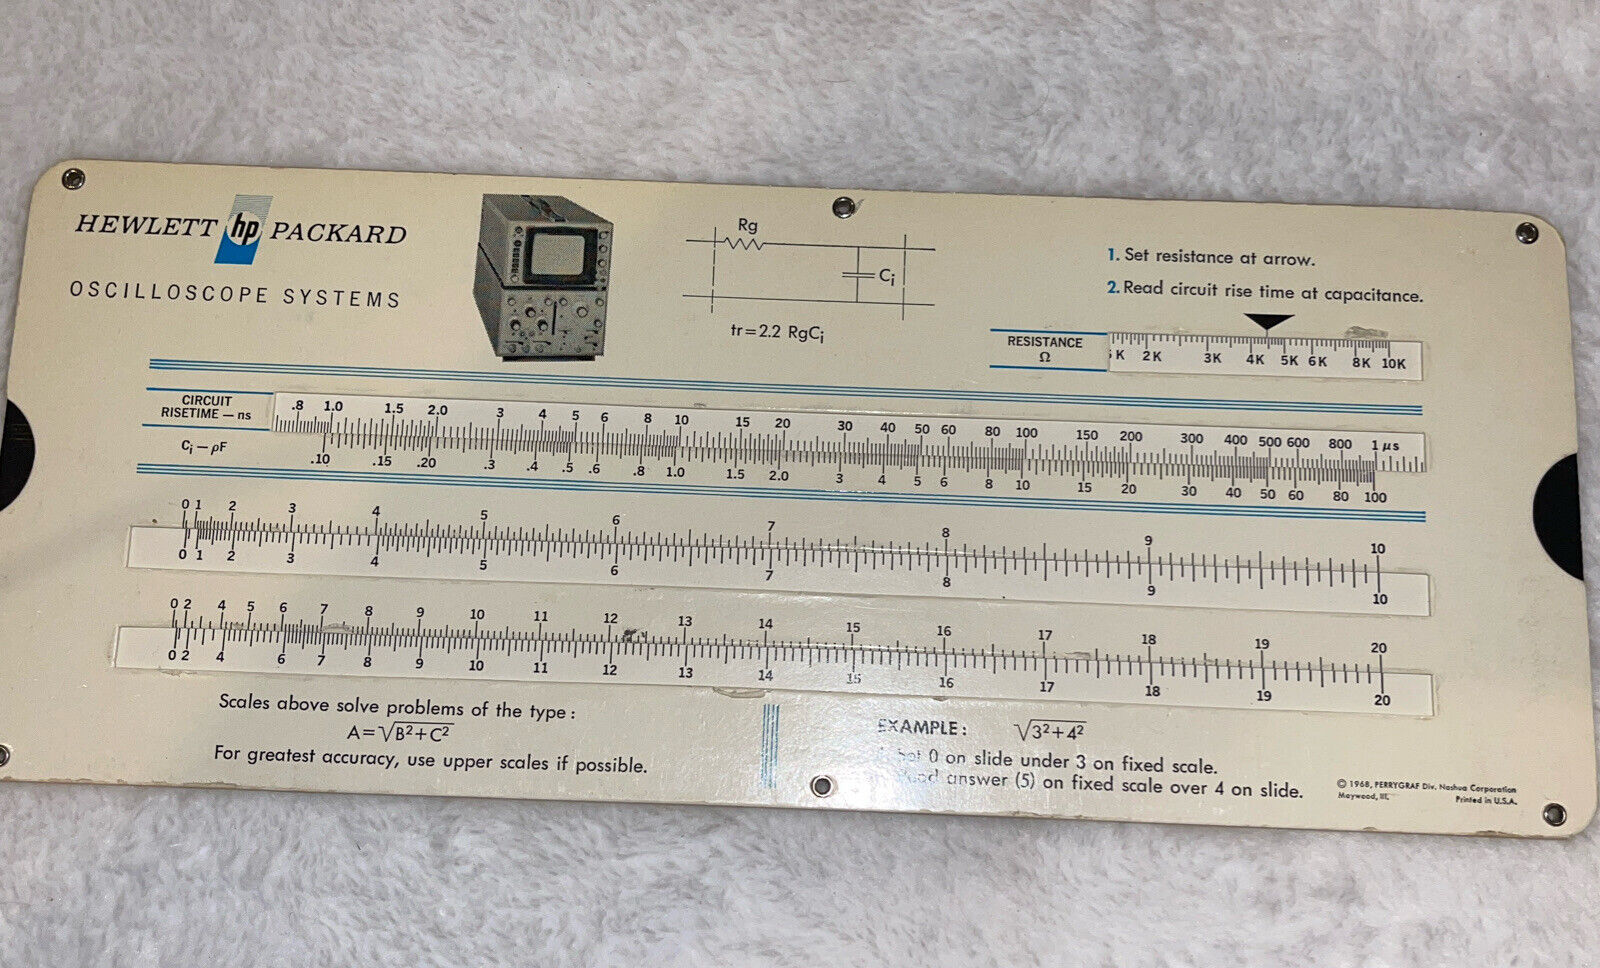 HP - Hewlett Packard Oscilloscope Measurement Error Calculator Slide Rule © 1968